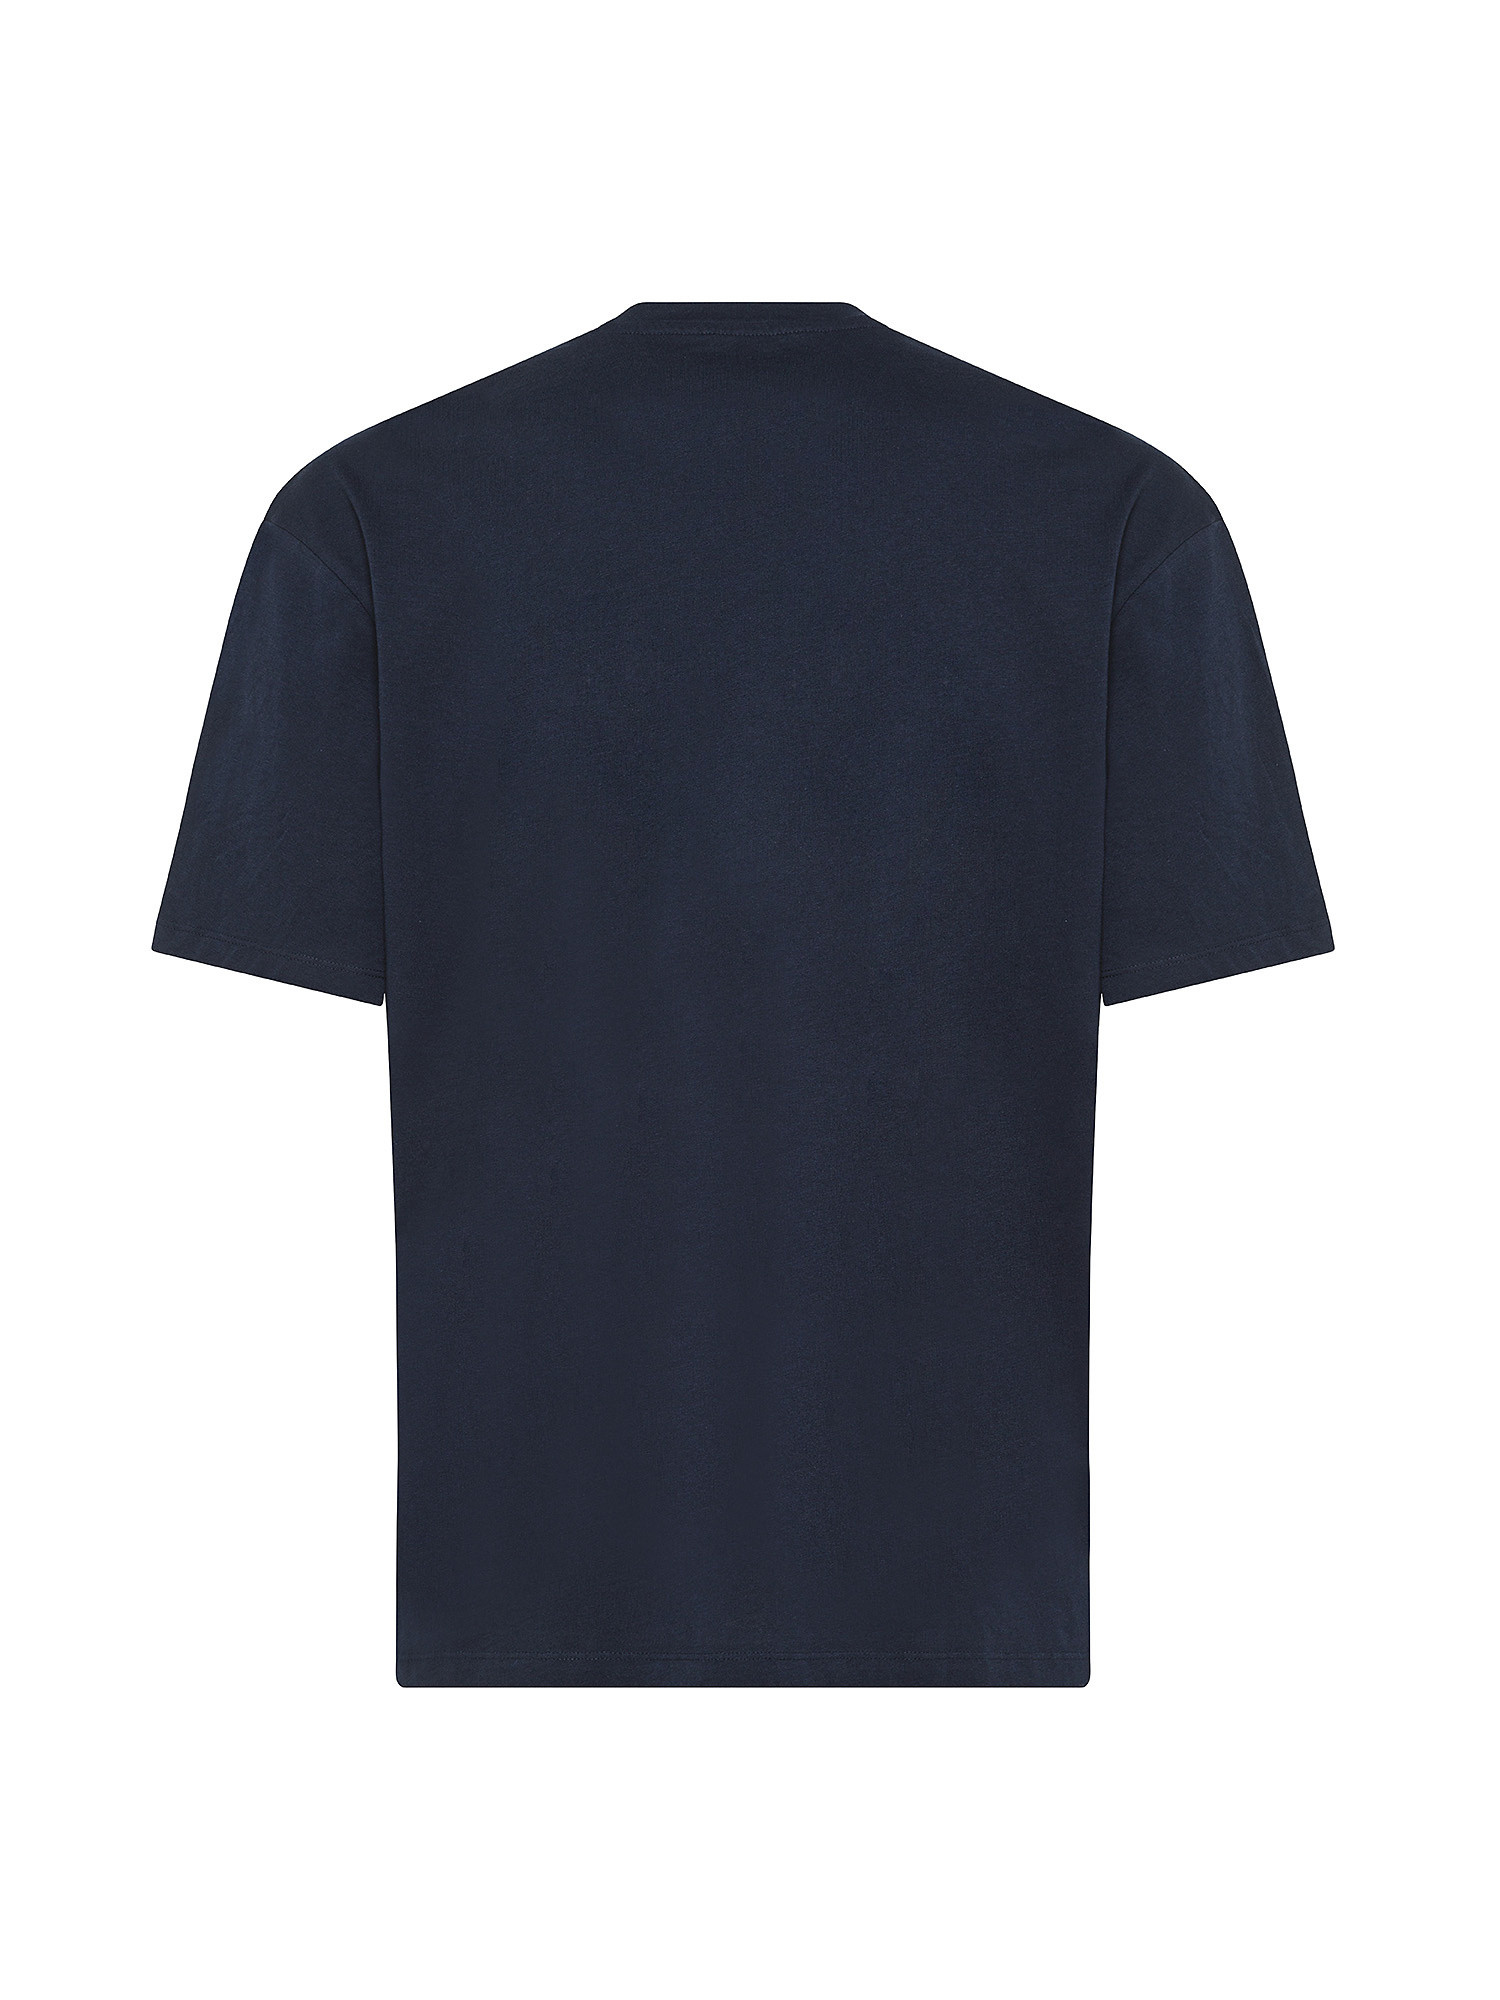 Jack & Jones - T-shirt regular fit con stampa, Blu, large image number 1